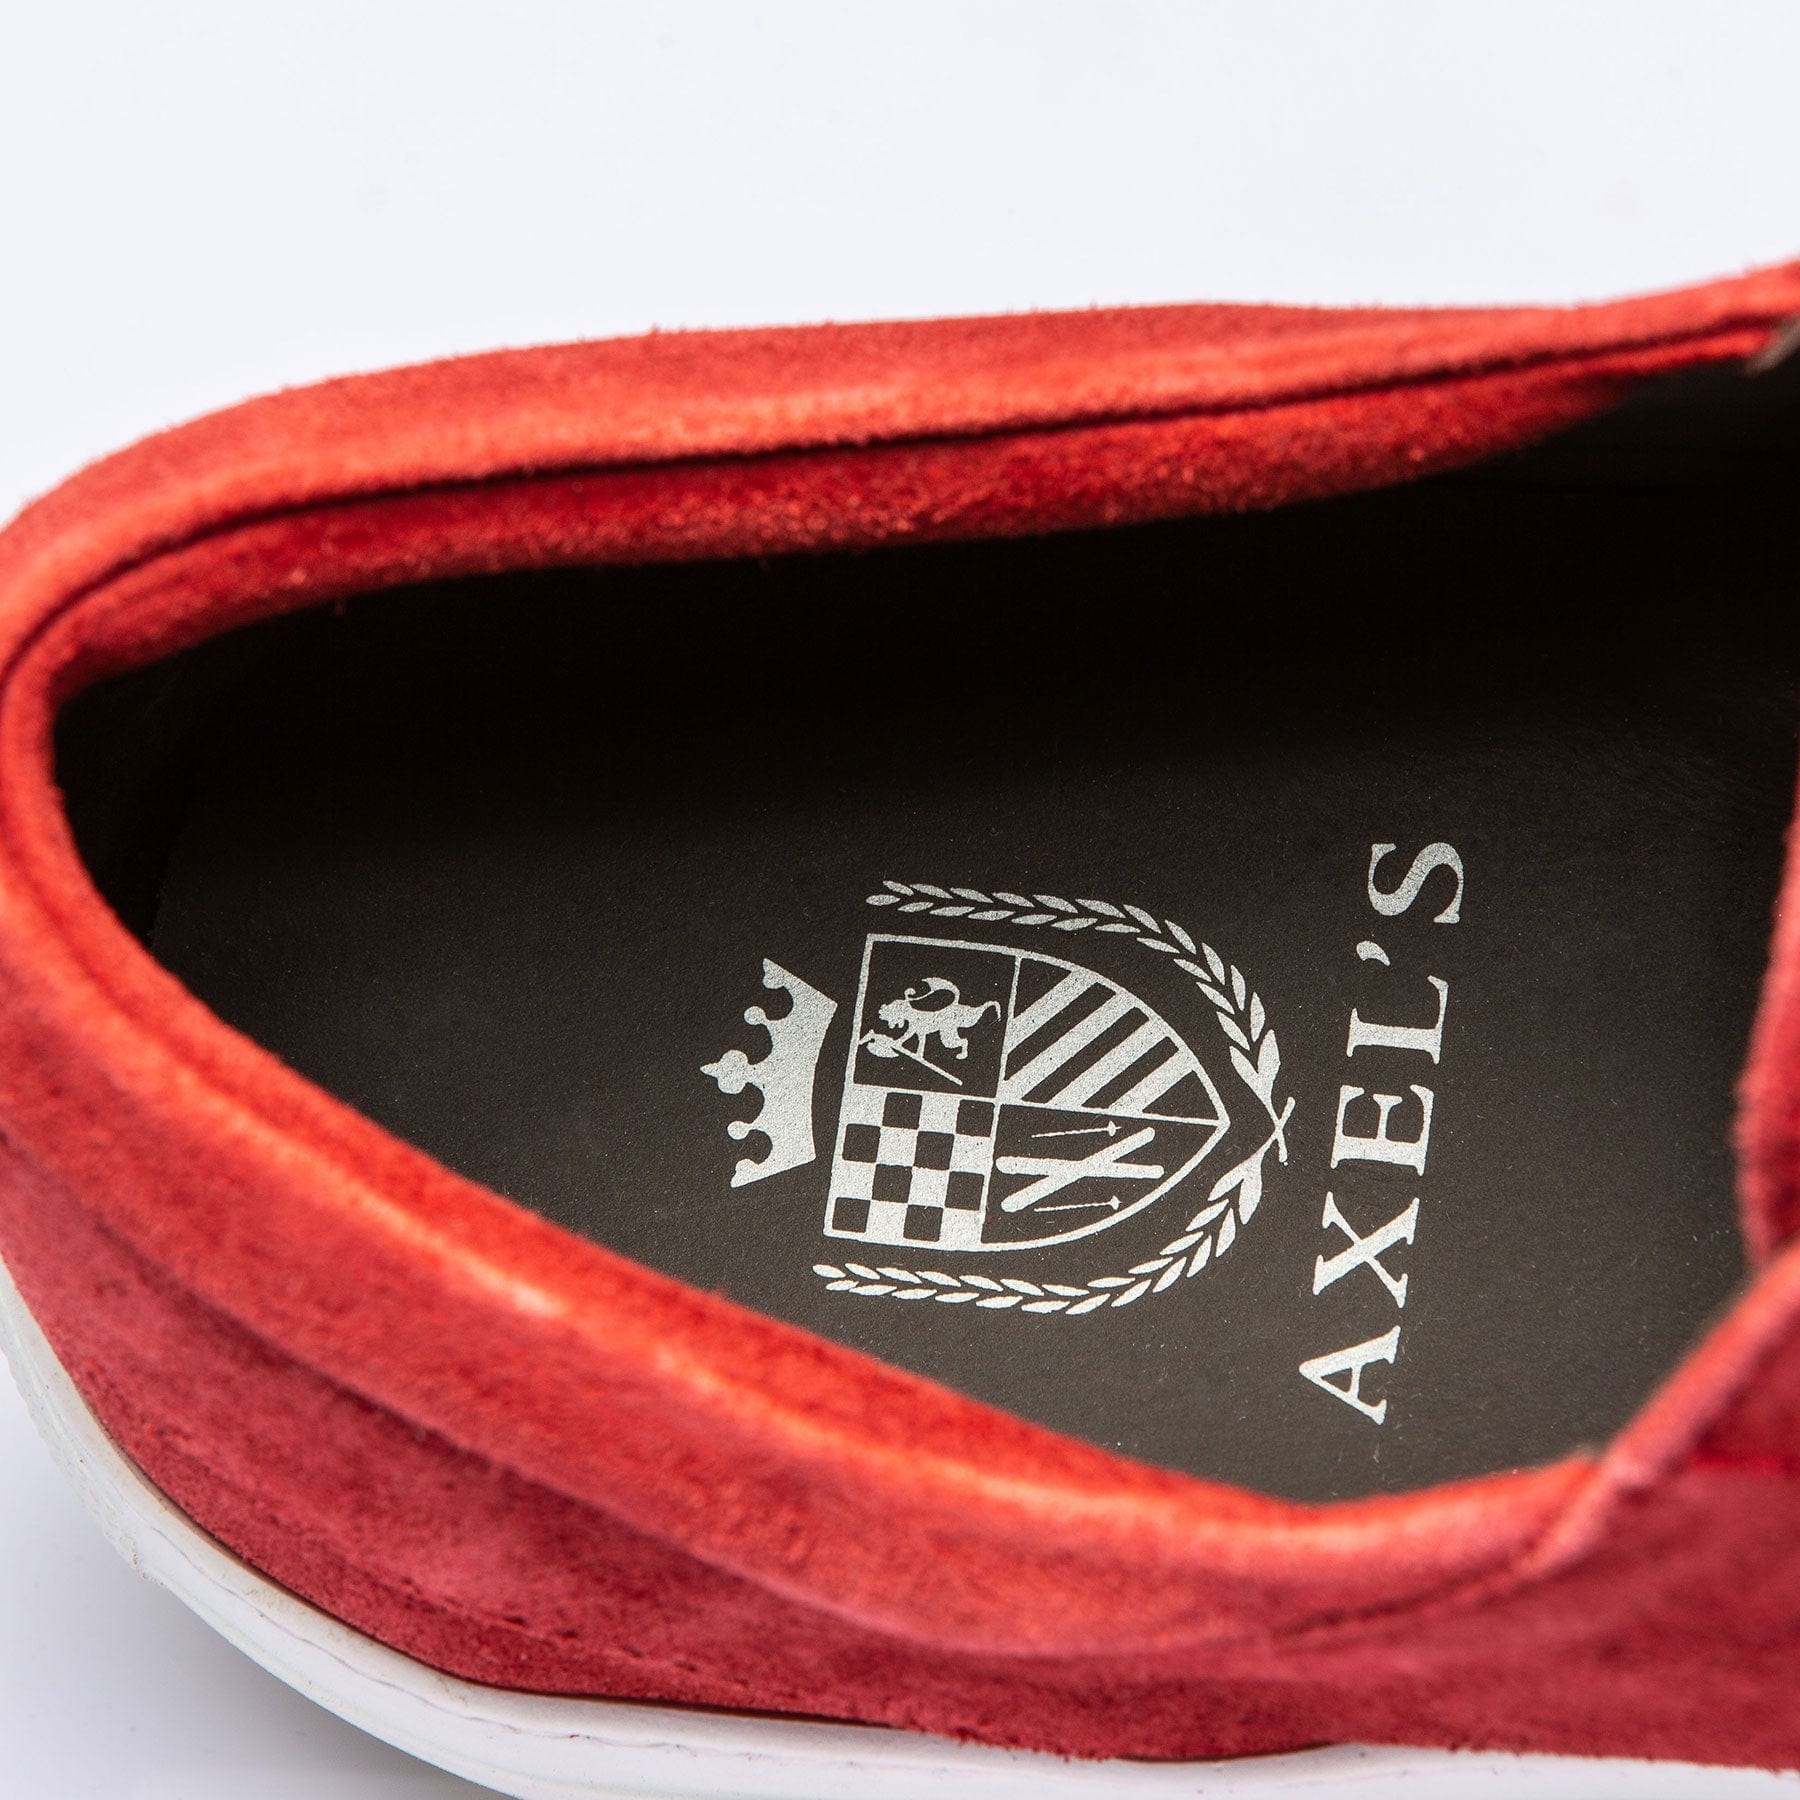 Salina Suede Sneaker Red - AXEL'S